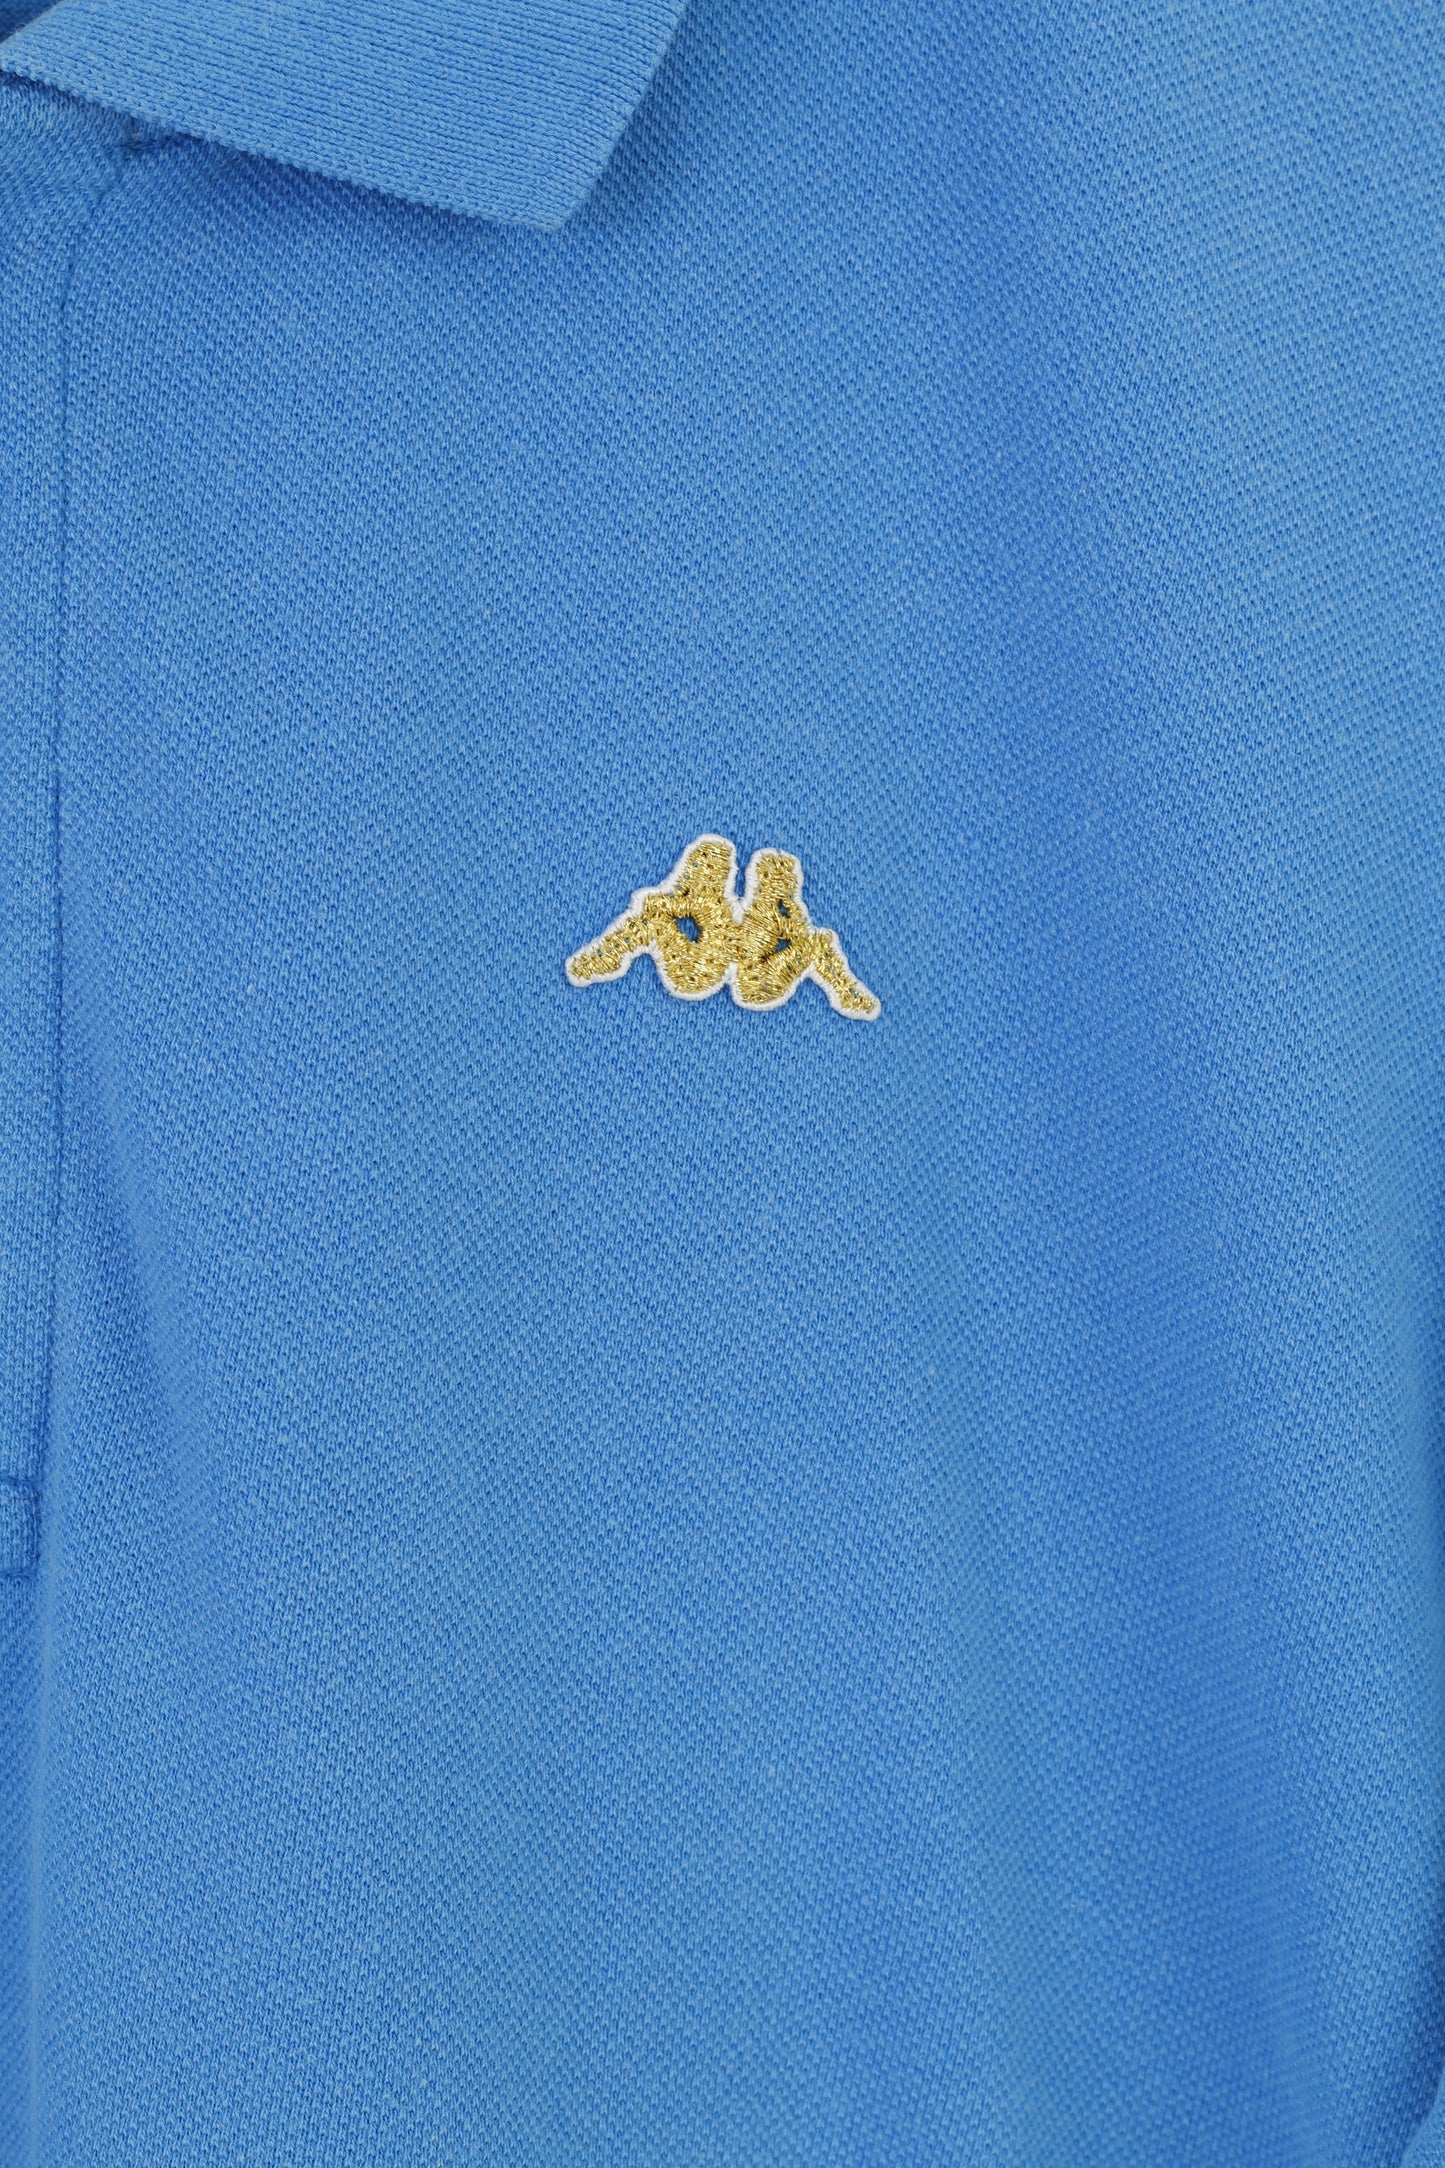 Robe Di Kappa Men M Polo Shirt Cotton Blue Gold Logo Short Sleeve Collar Top